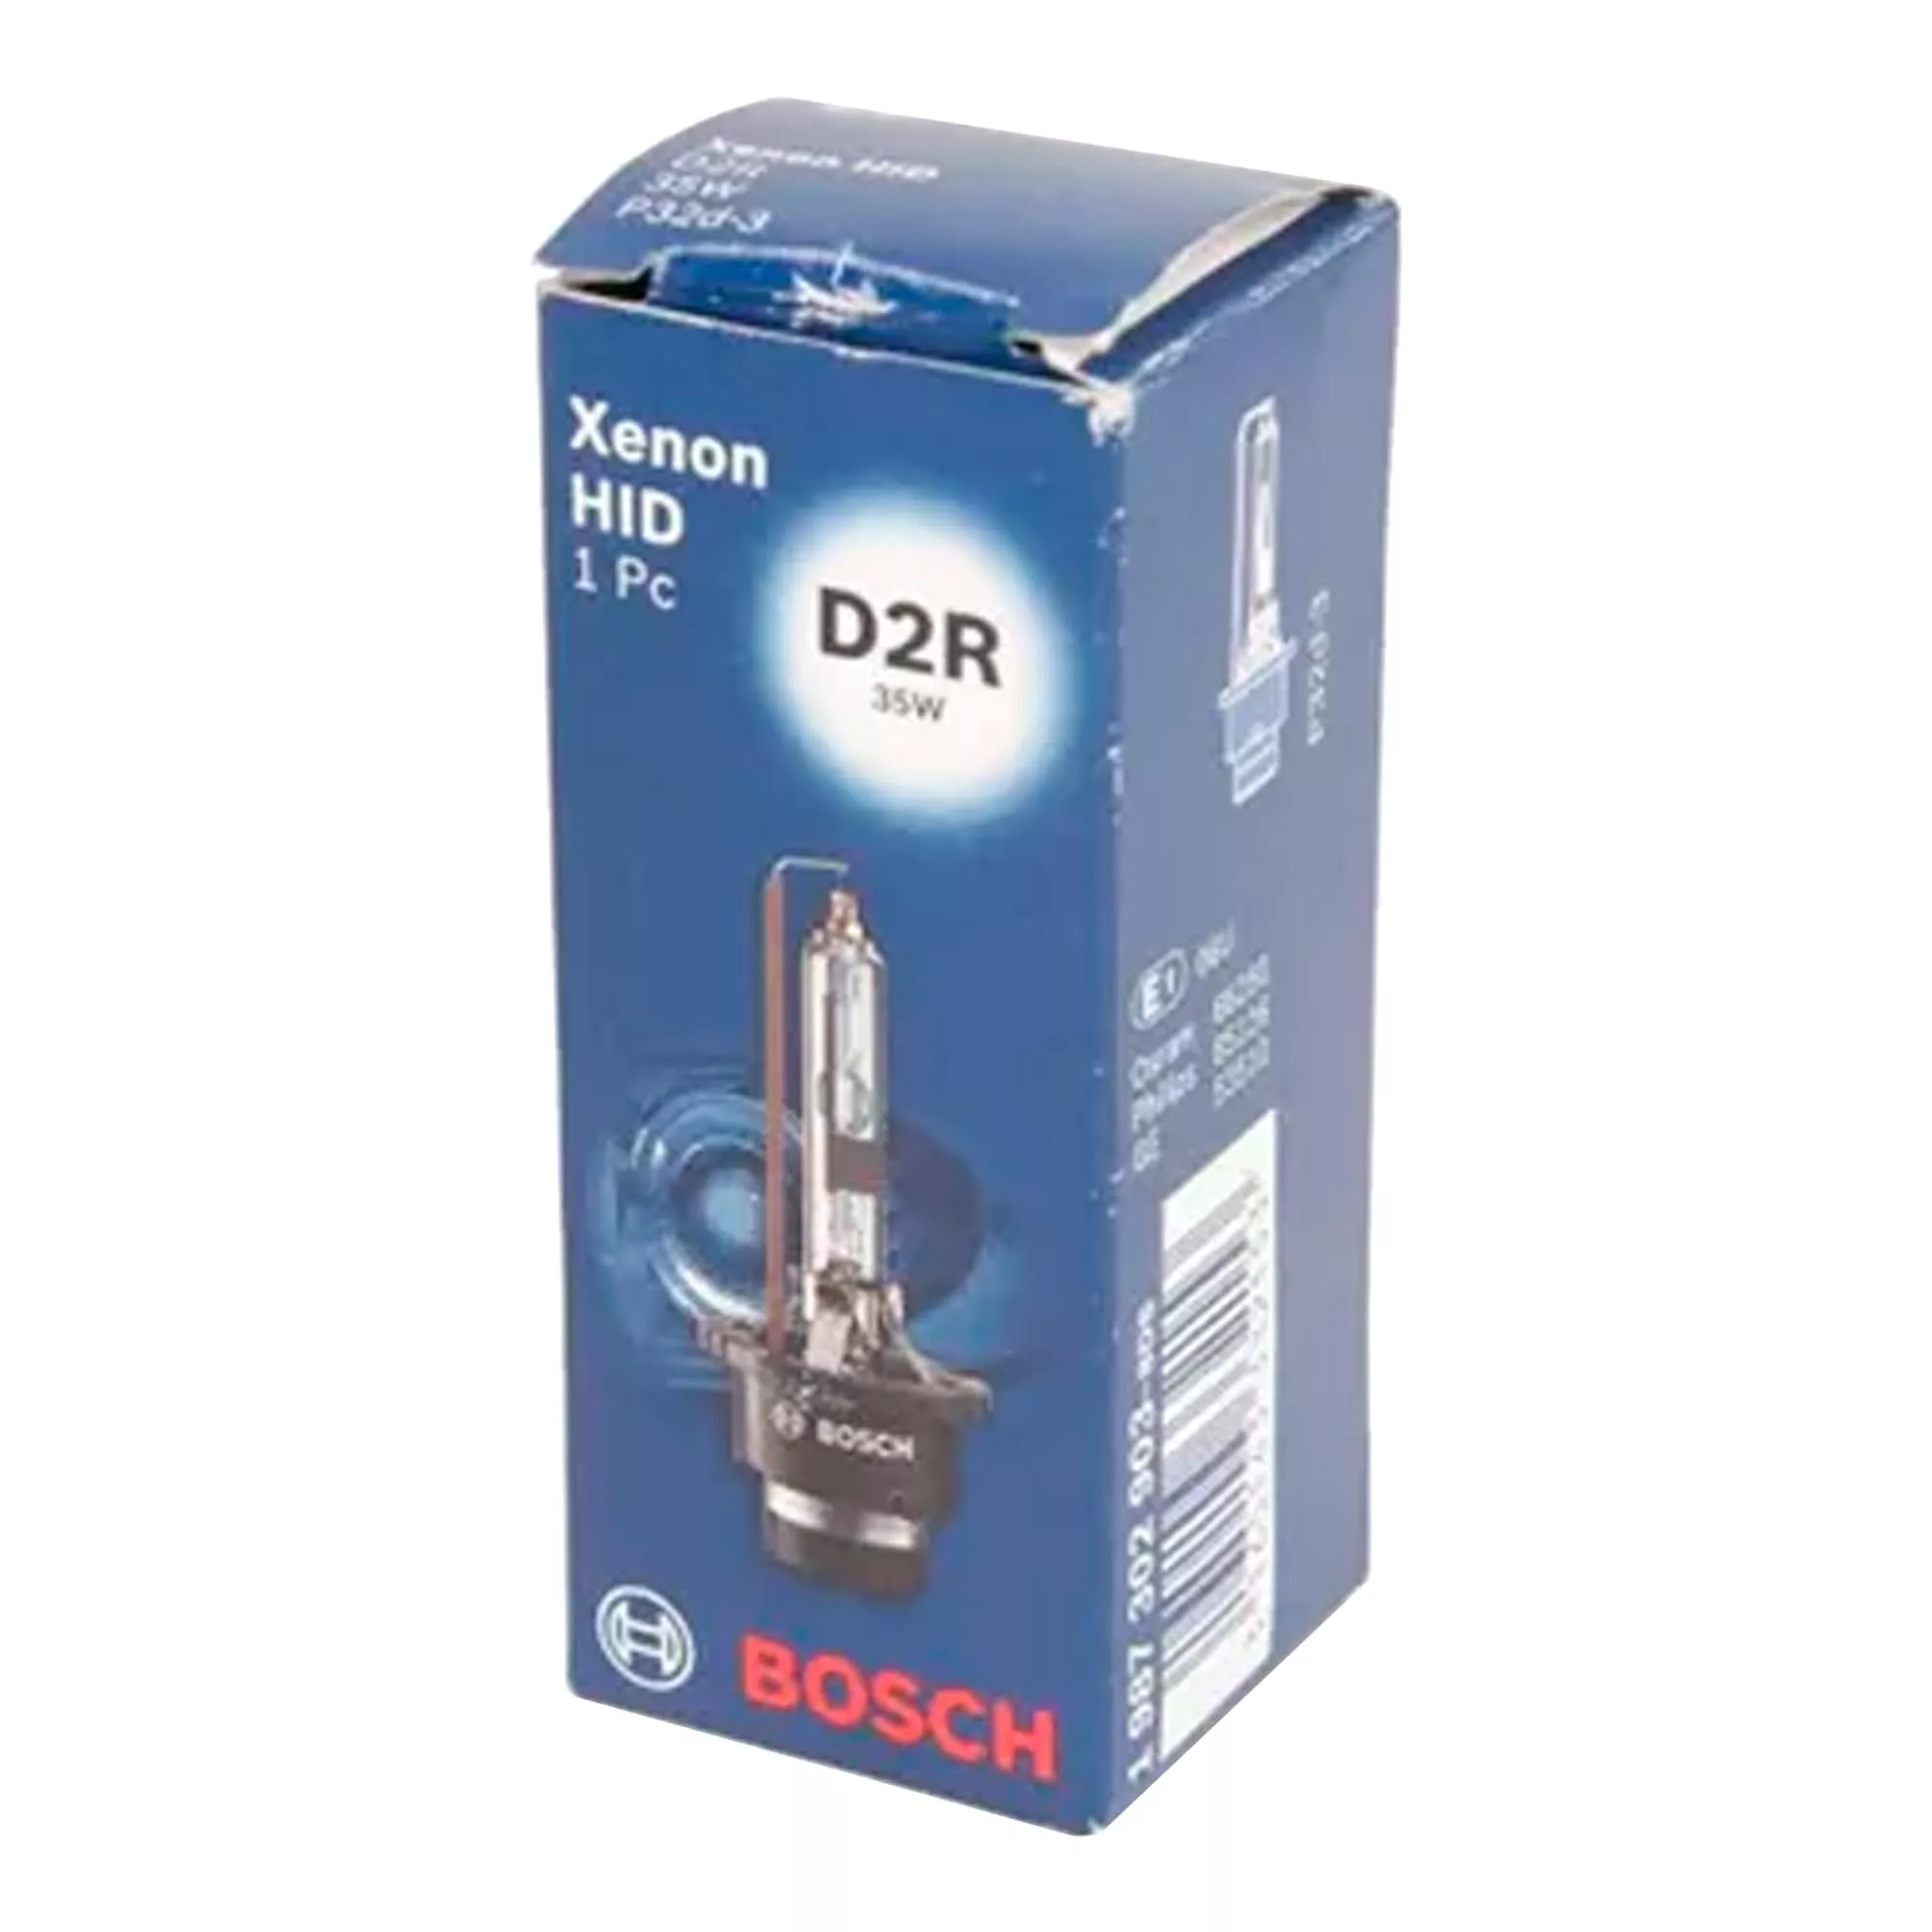 Лампа Bosch Xenon XID D2R 35W 1 987 302 903